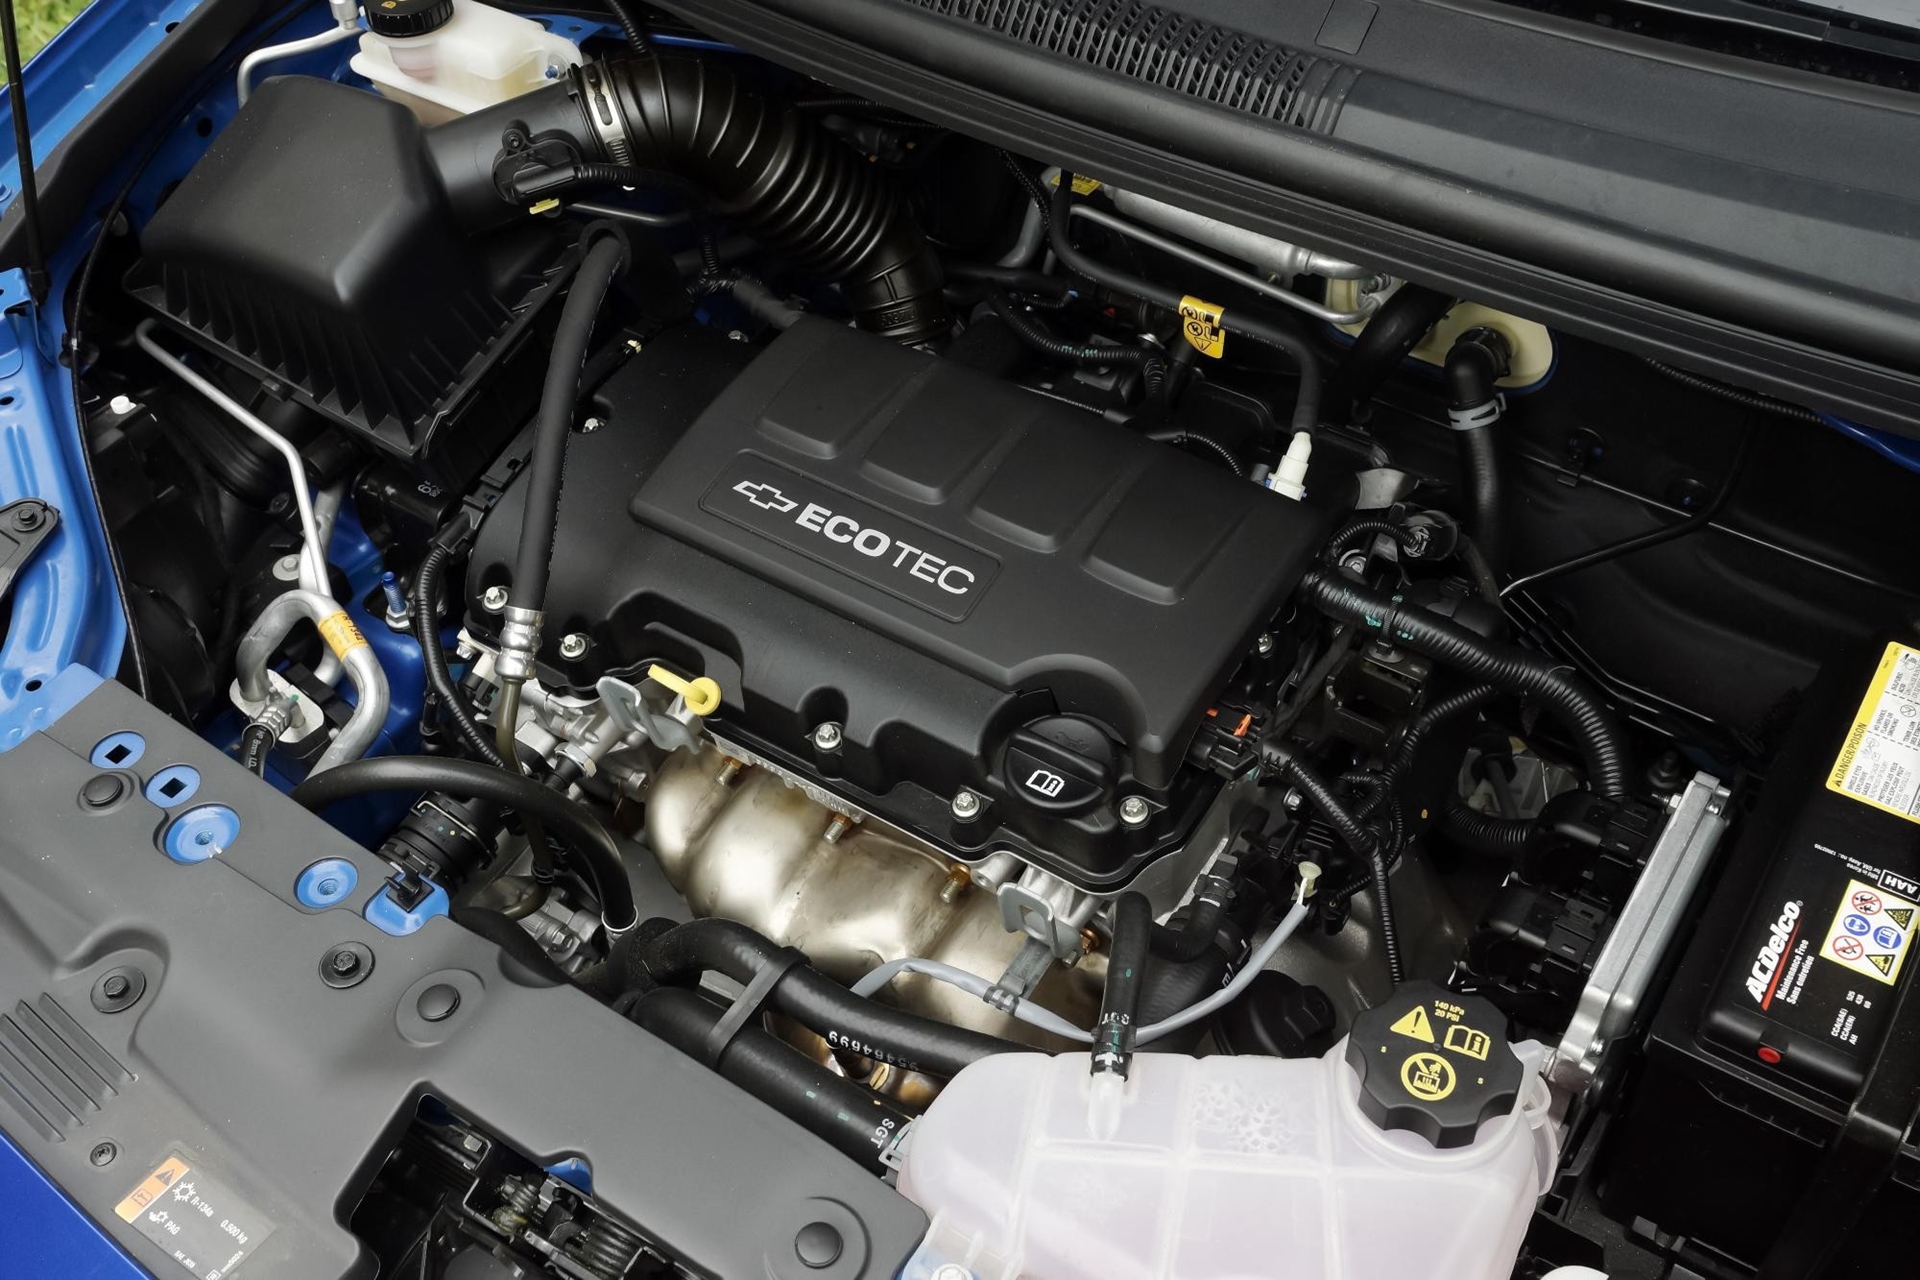 Chevrolet Aveo ecotec engine